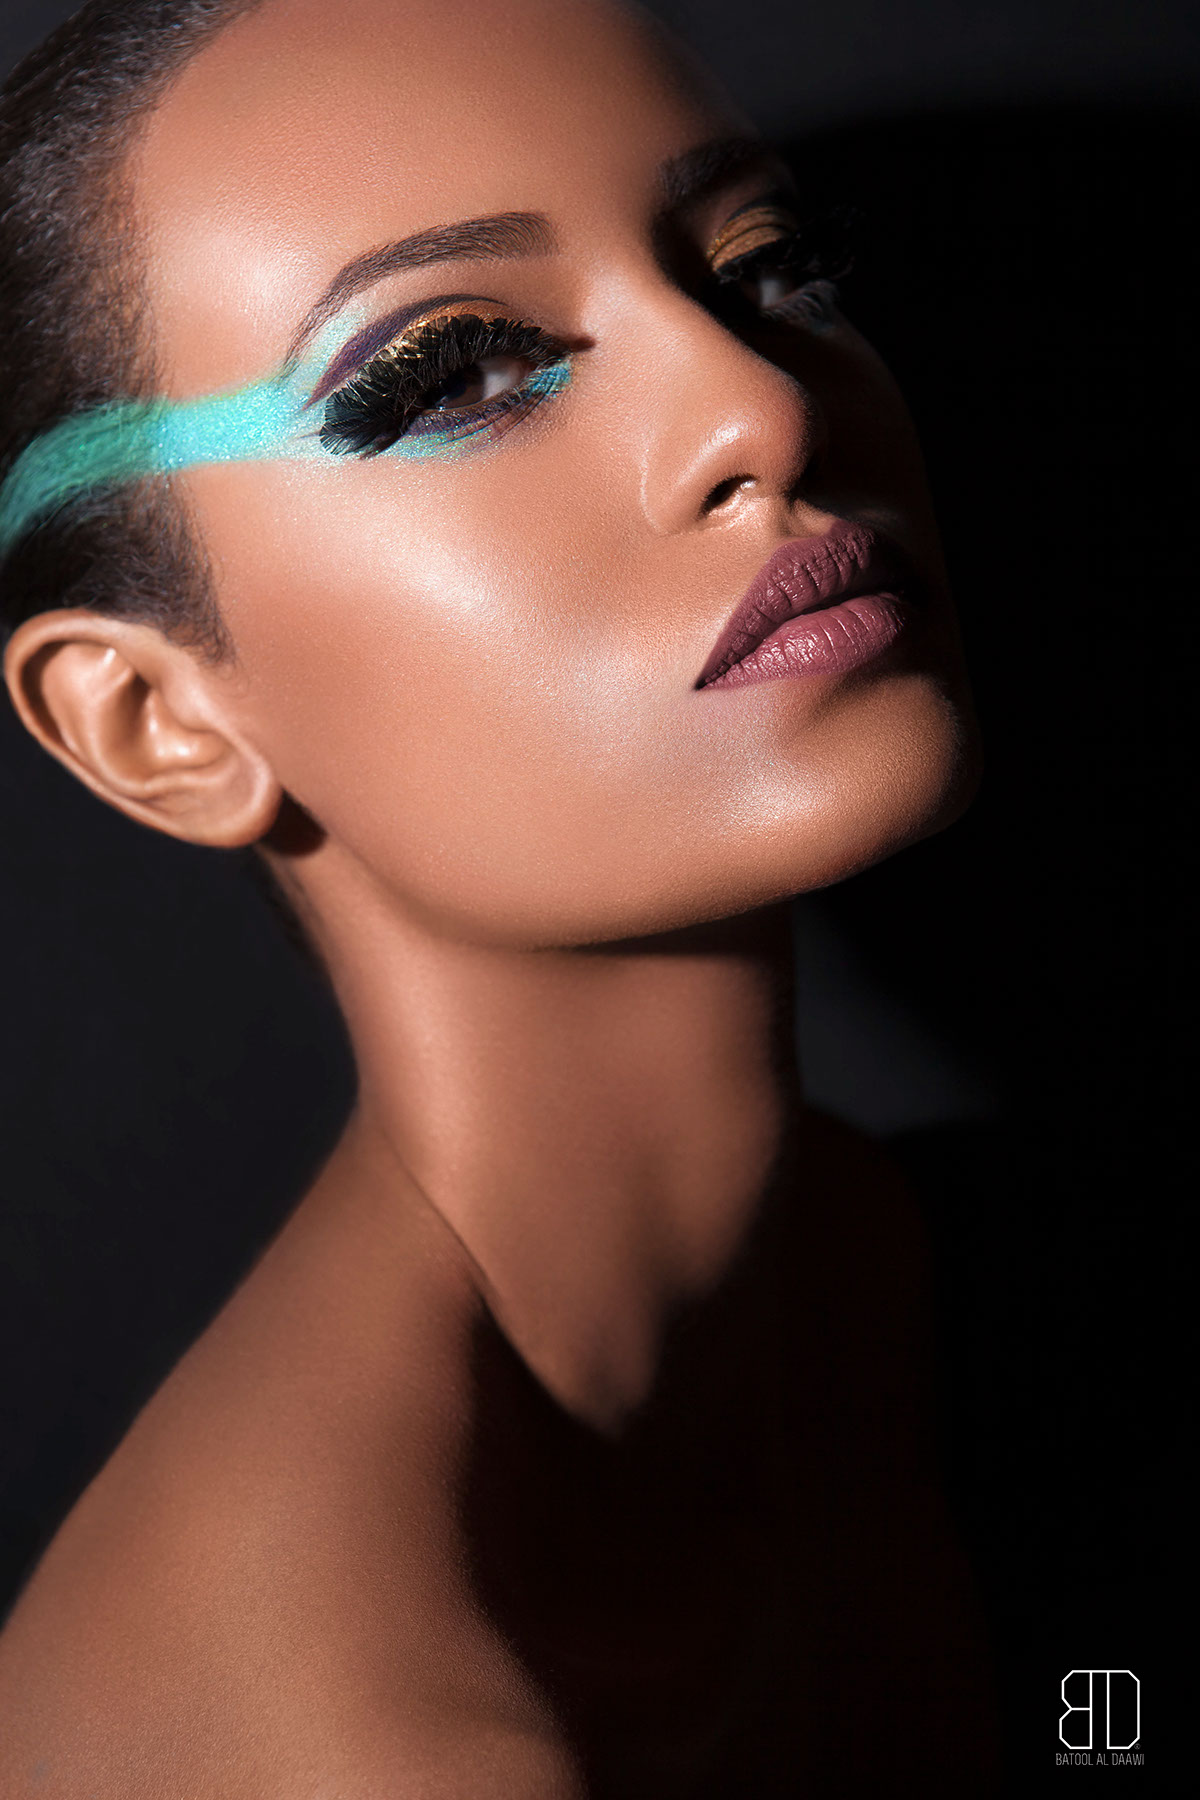 beauty makeup art artistic ArtisticMakeUp egypt model cairo gold eyemakeup lips studio studiophotography studioshoot studiolighting